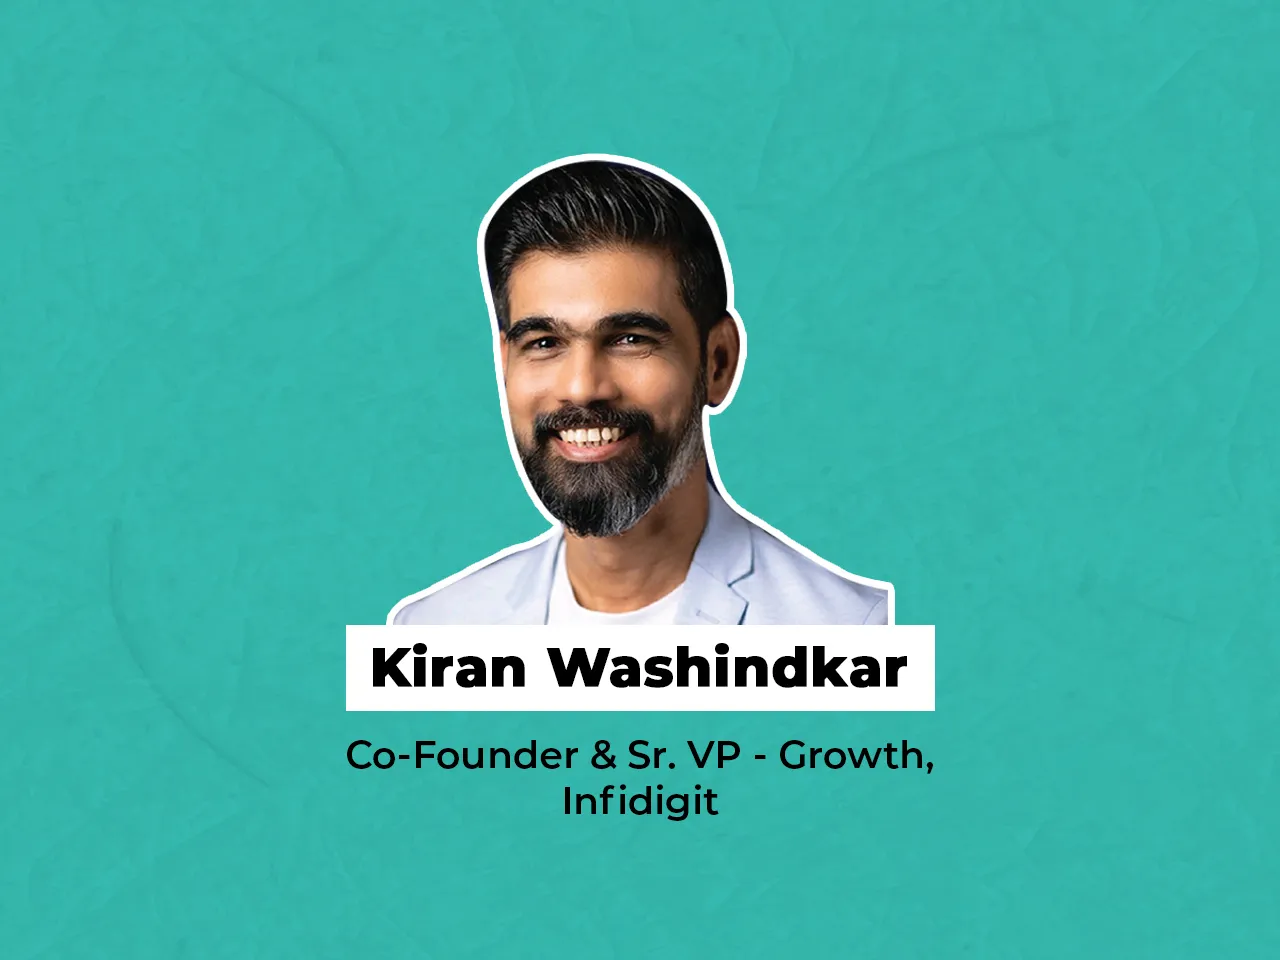 Infidigit elevates Kiran Washindkar as Co-Founder & Sr. VP of Growth